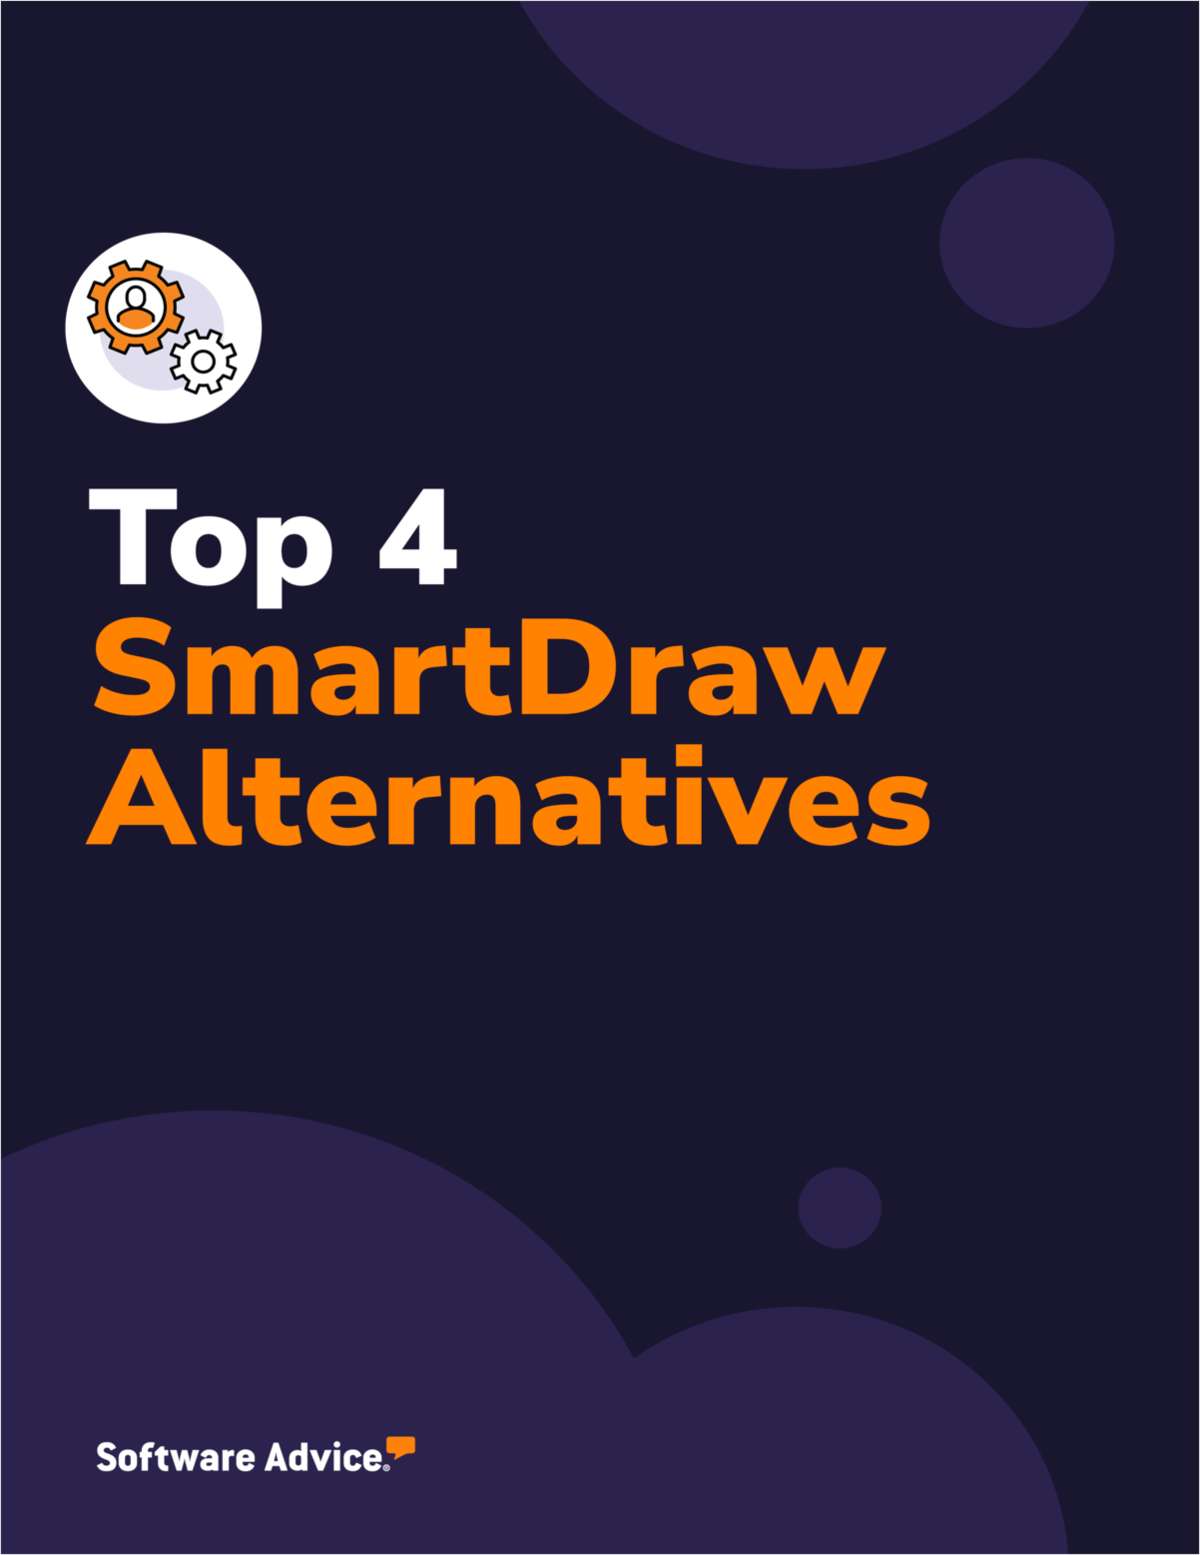 Top 4 SmartDraw Alternatives